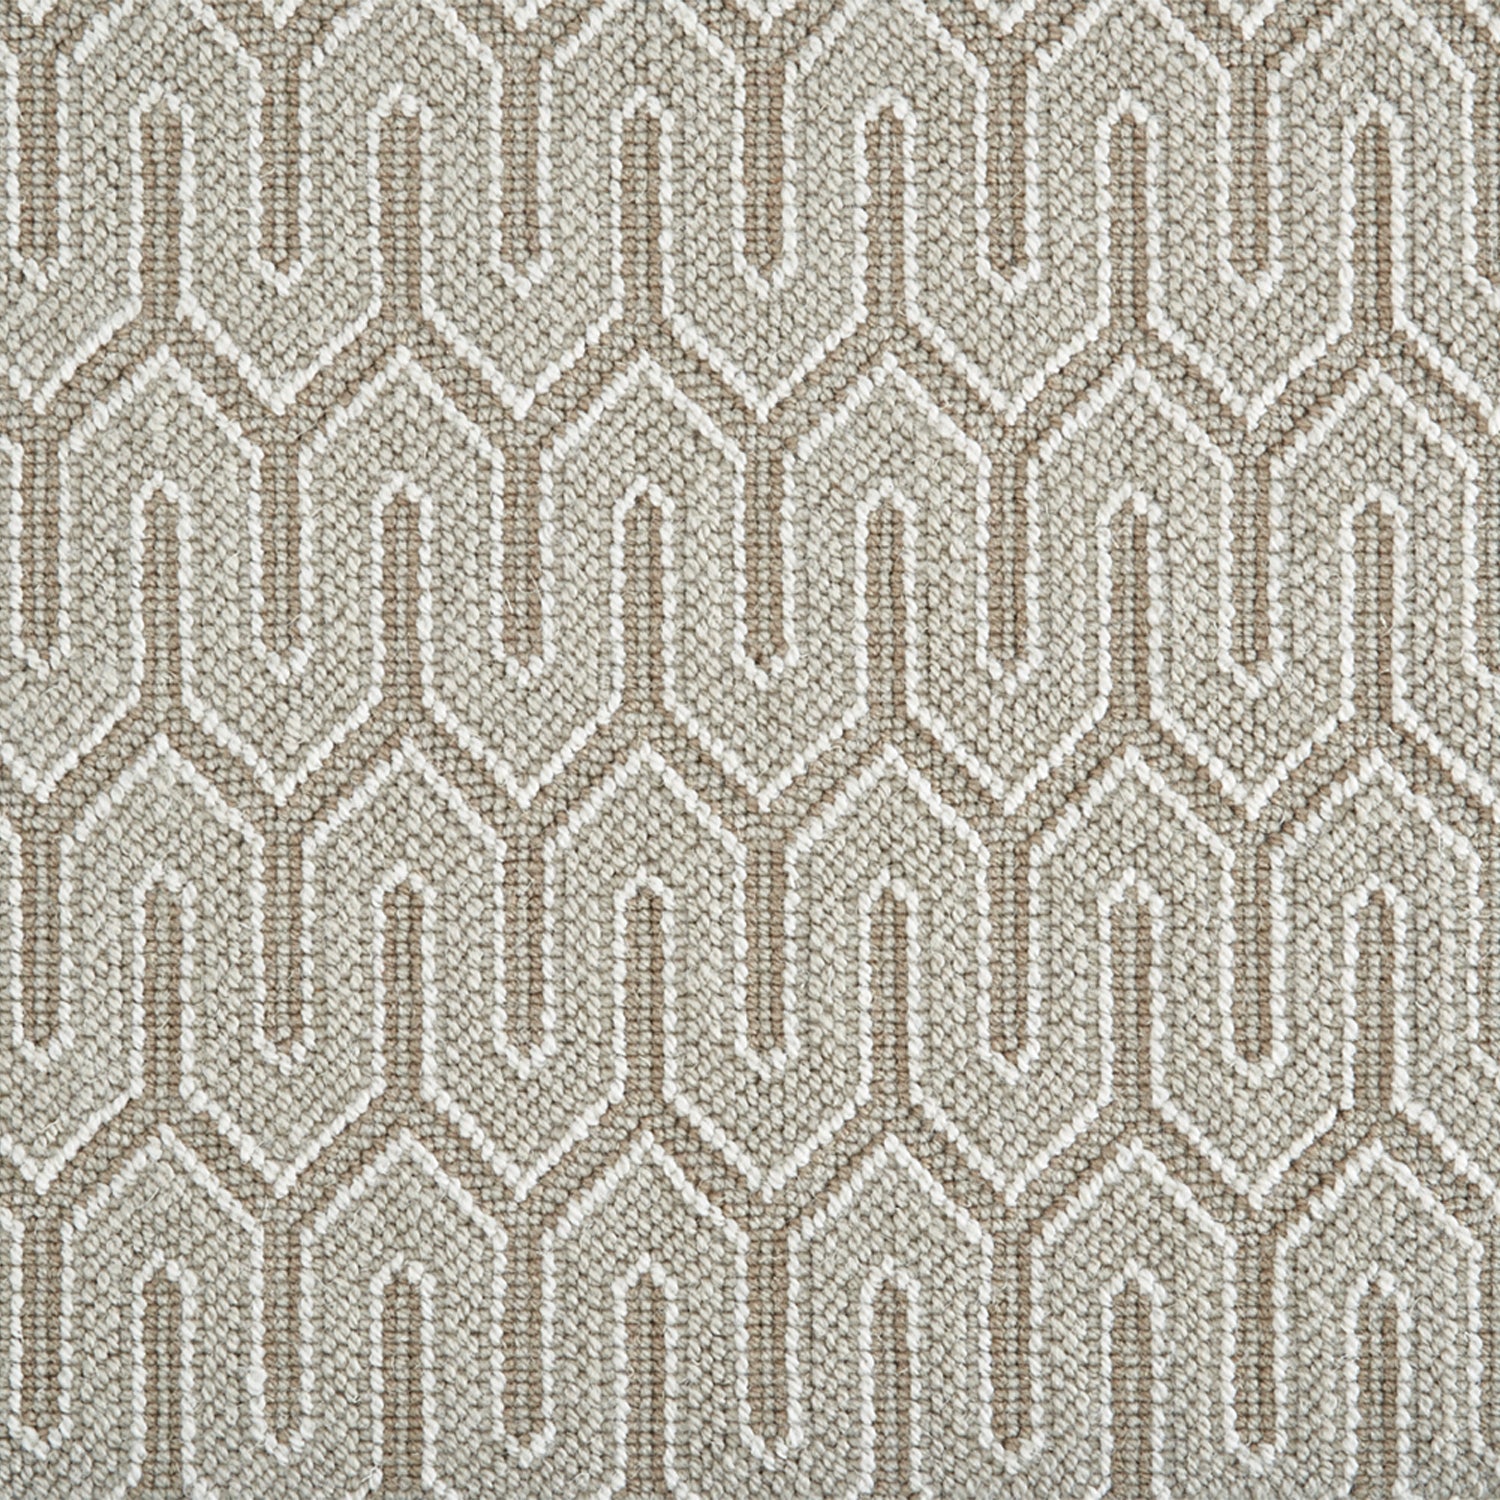 Wool-blend broadloom carpet swatch in a chunky geometric linear weave in white, cream and tan.